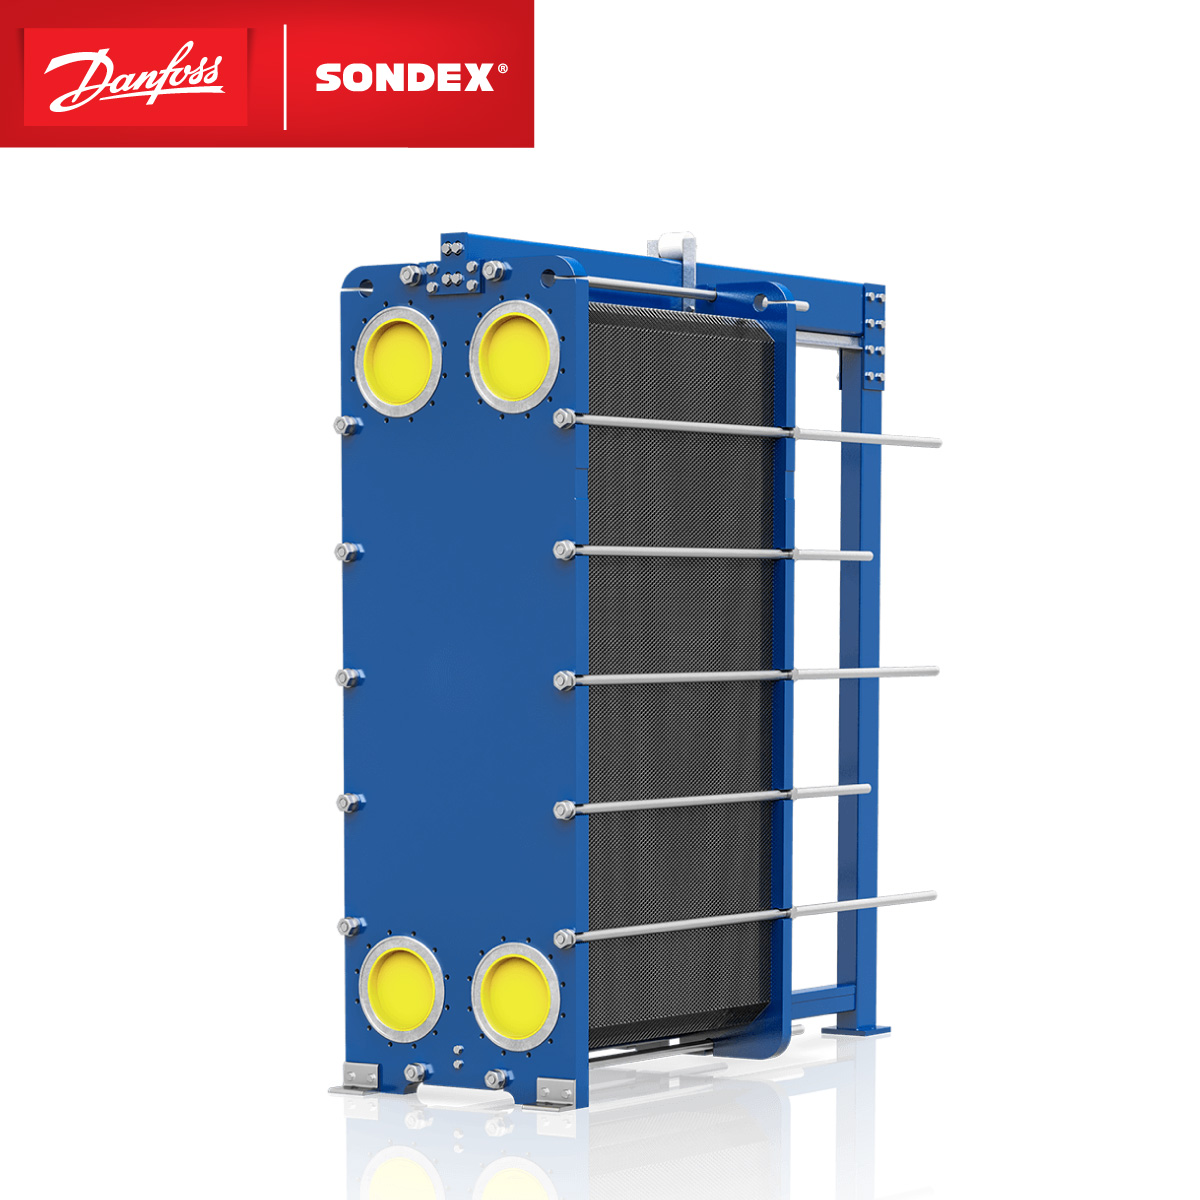 S18 Sondex Gasketed Plate Heat Exchangers